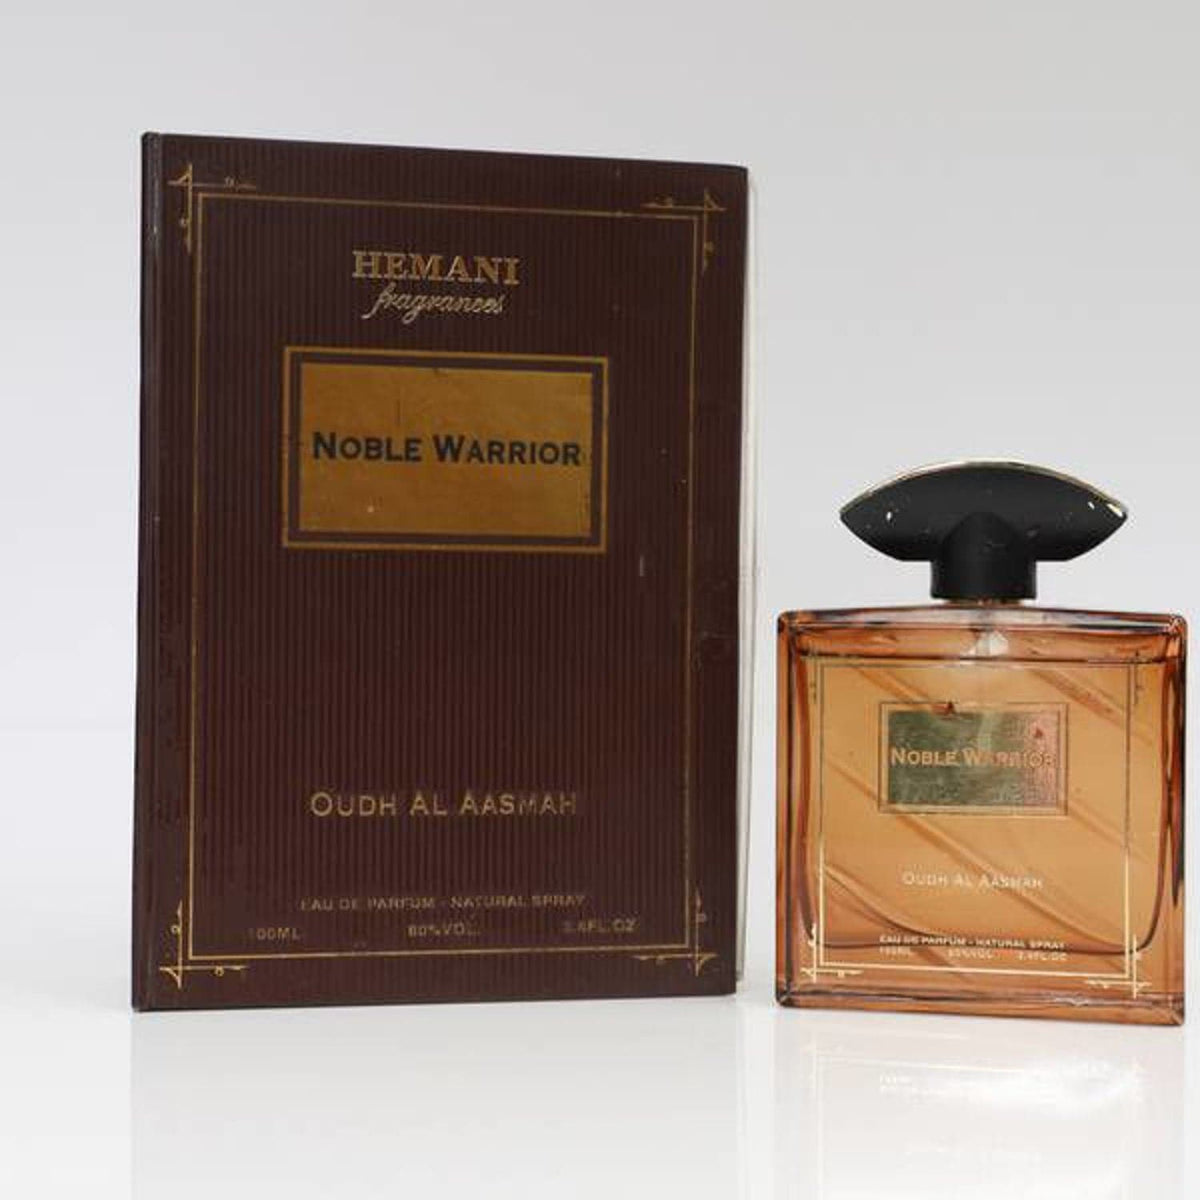 Hemani Noble Warrior Perfume 100Ml - Premium  from Hemani - Just Rs 900.00! Shop now at Cozmetica